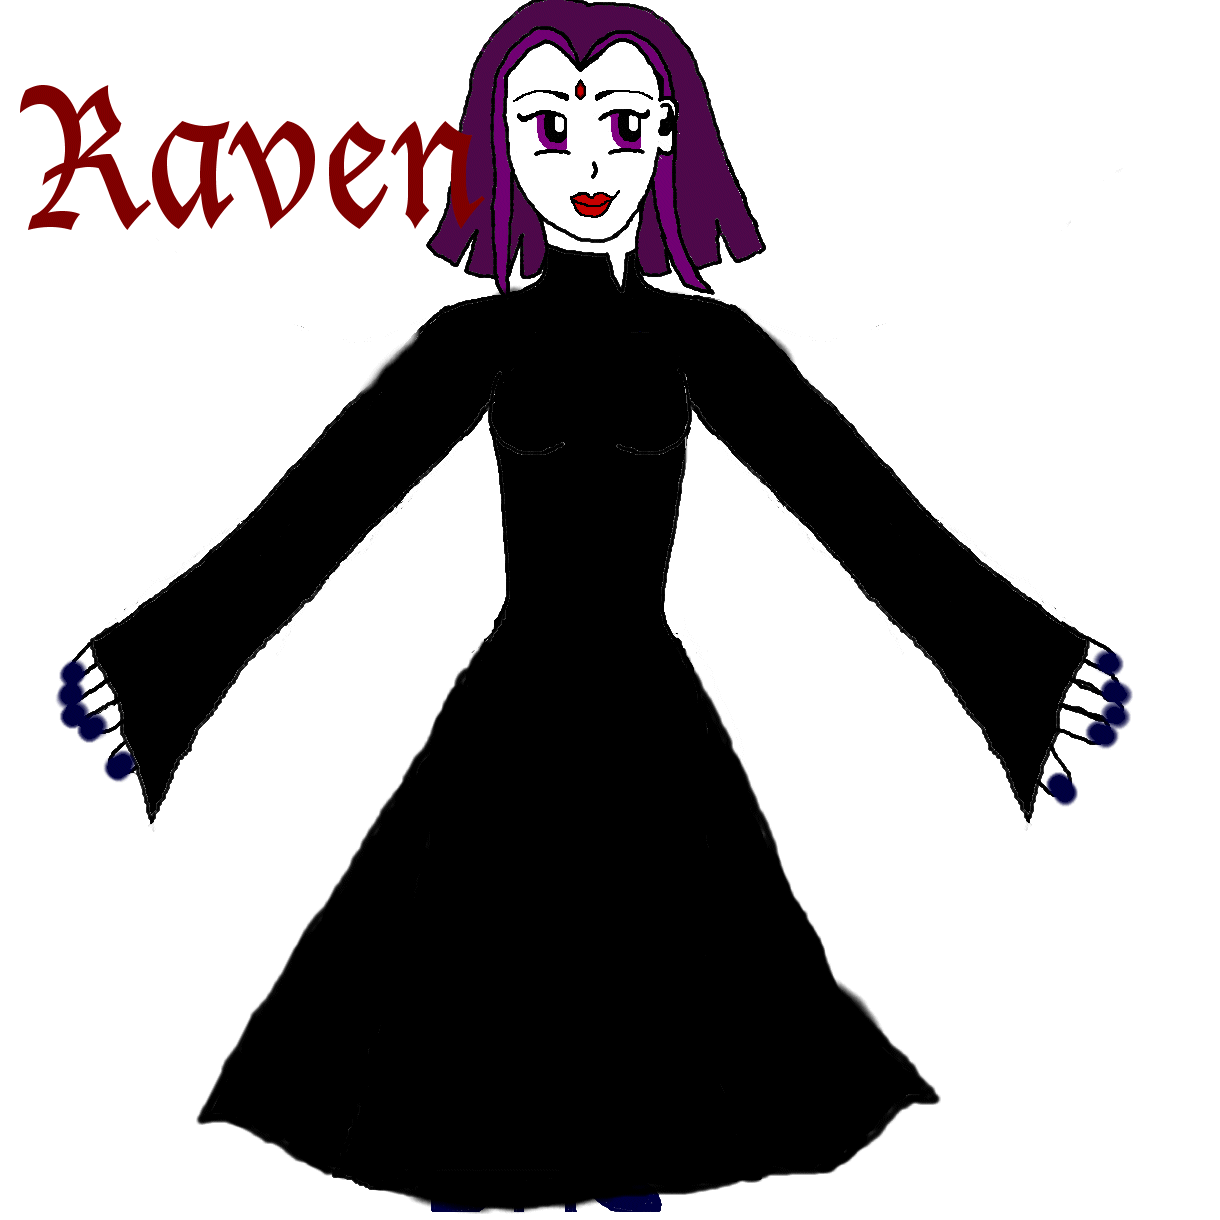 Raven in dress by Shanelli